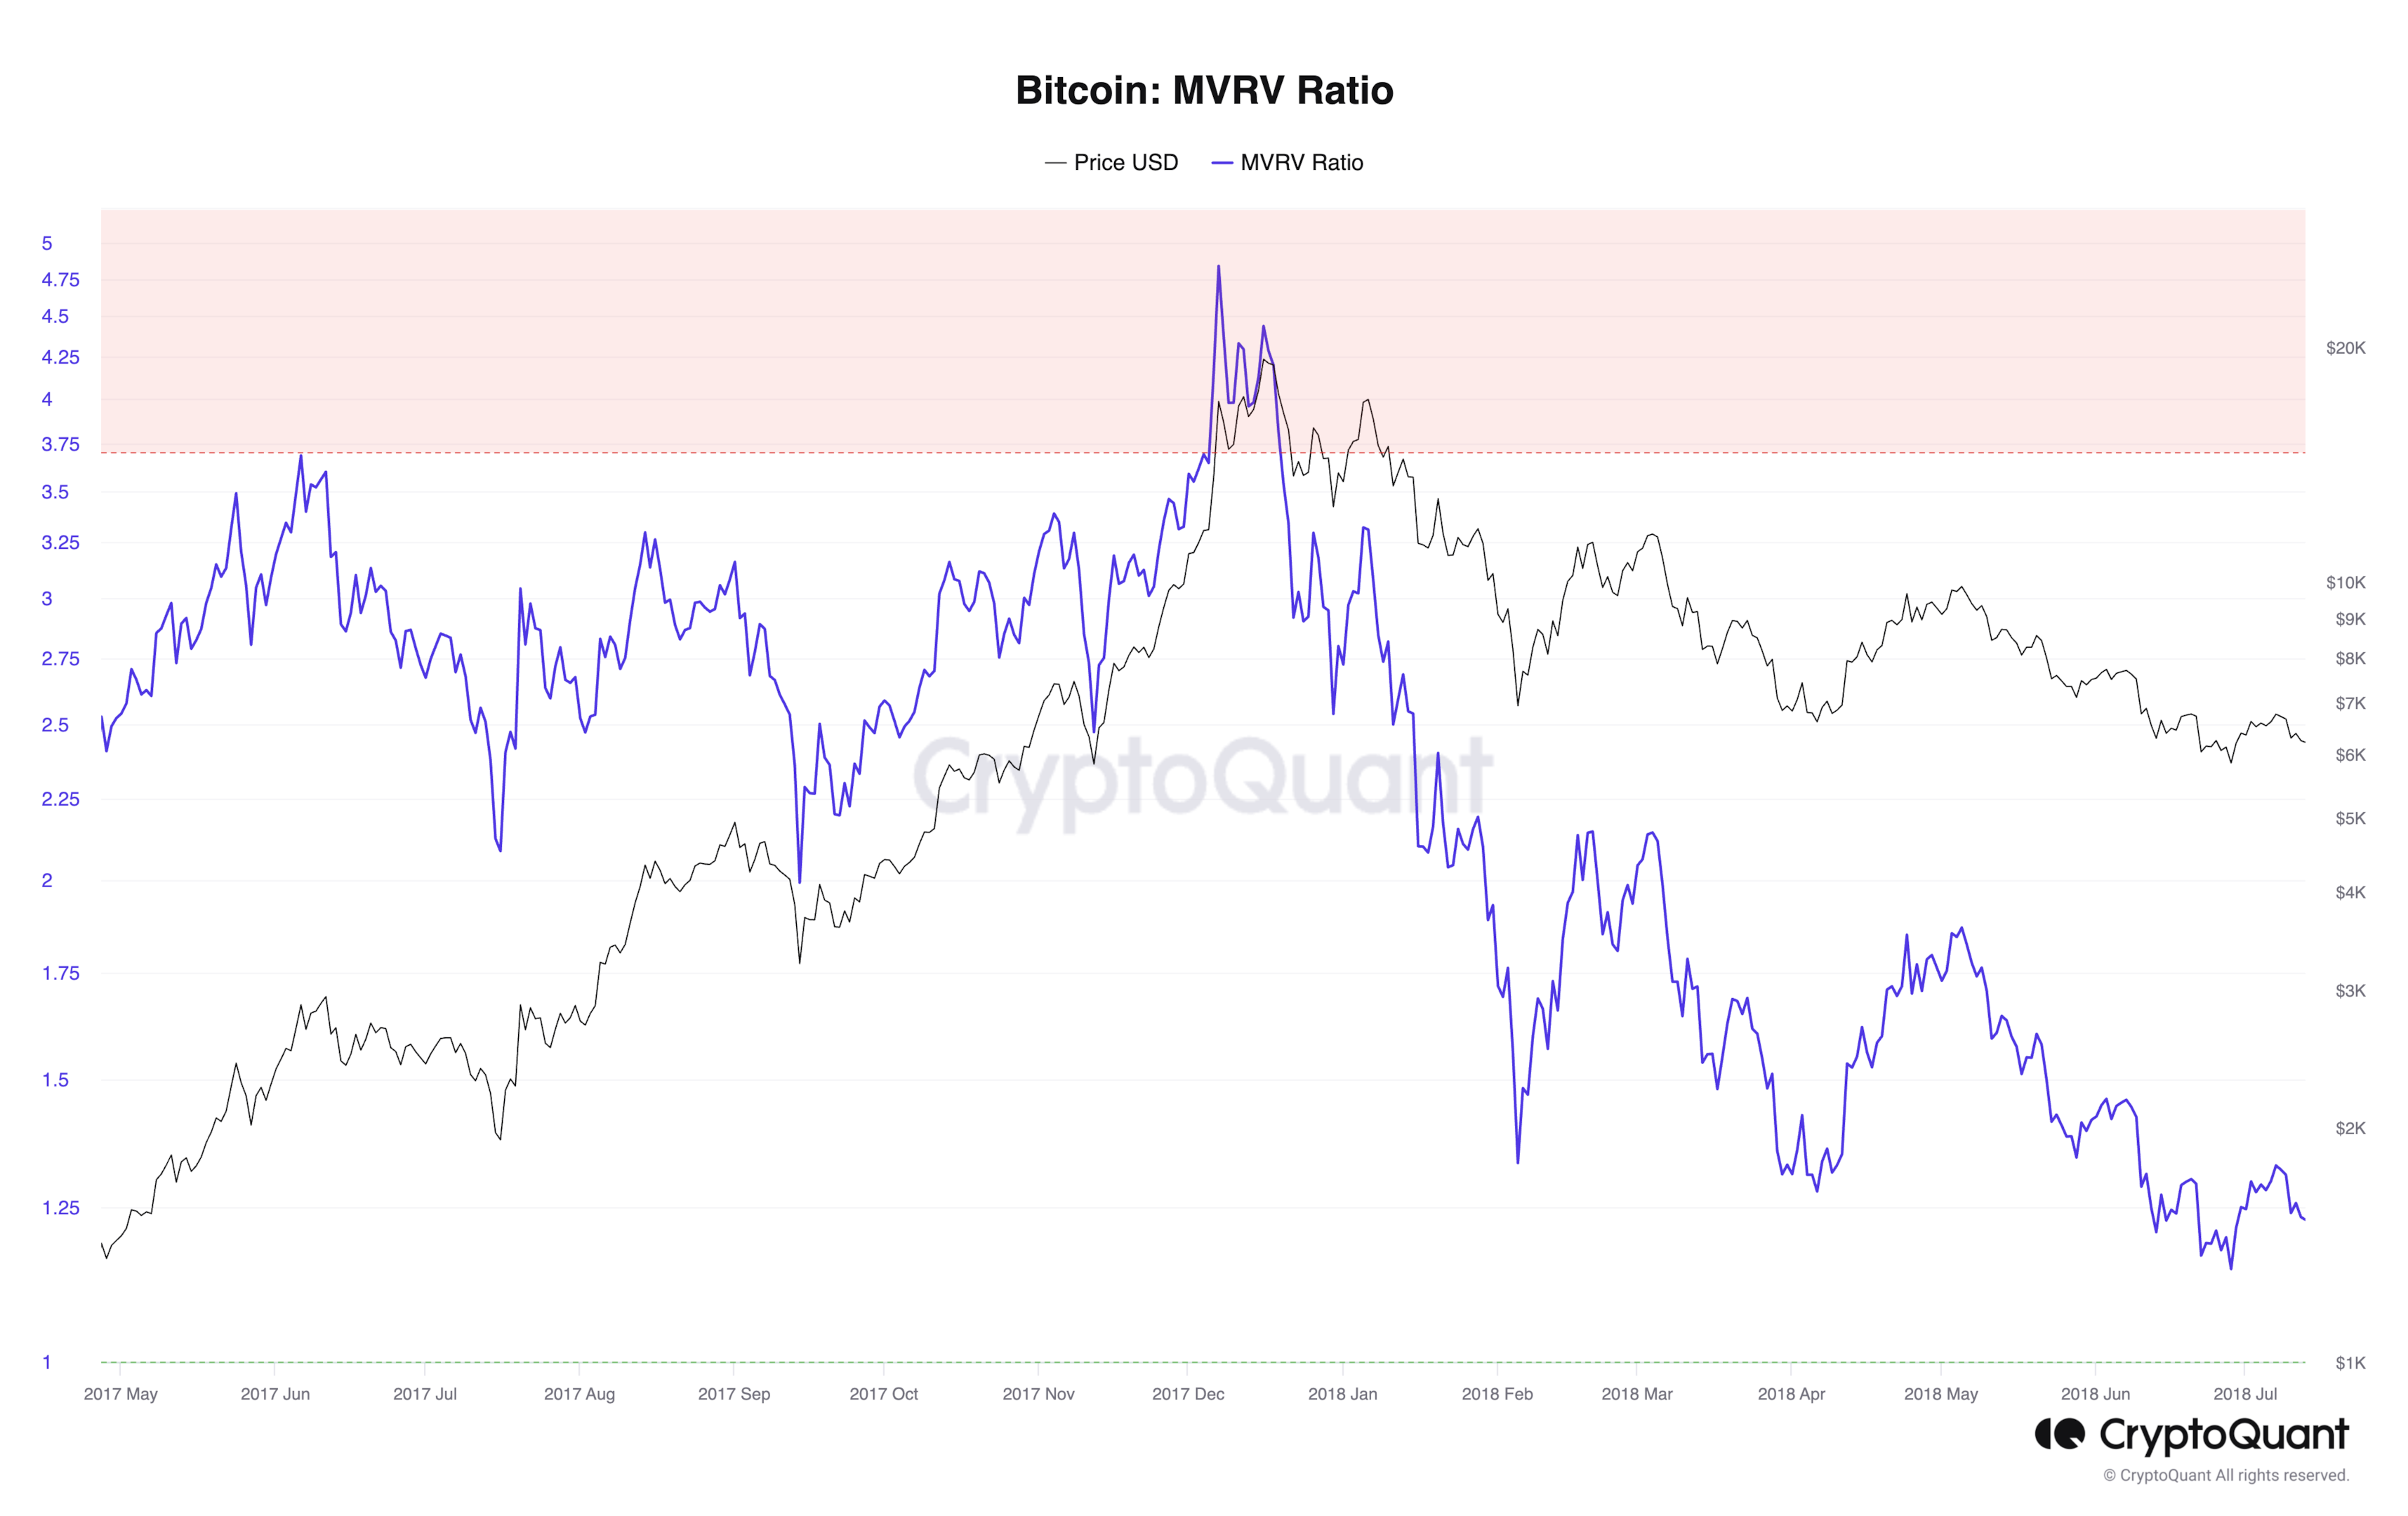 Bitcoin MVRV Ratio - Overvaluation